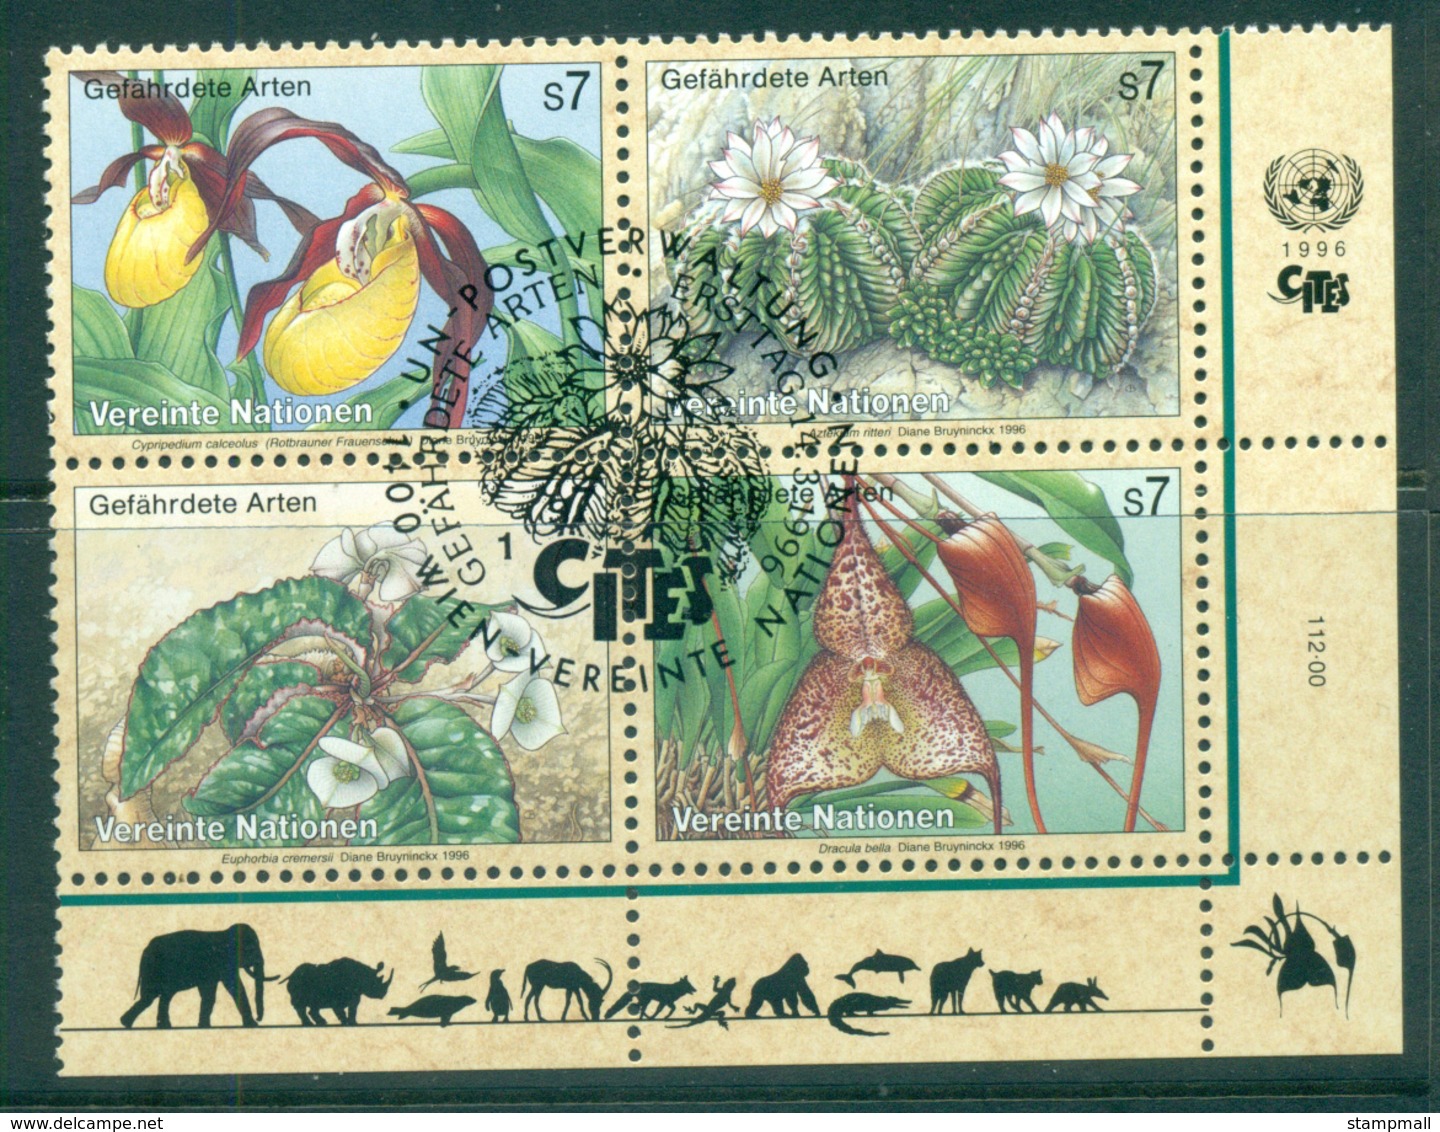 UN Vienna 1996 Endangered Species Blk 4 CTO Lot66095 - Unused Stamps